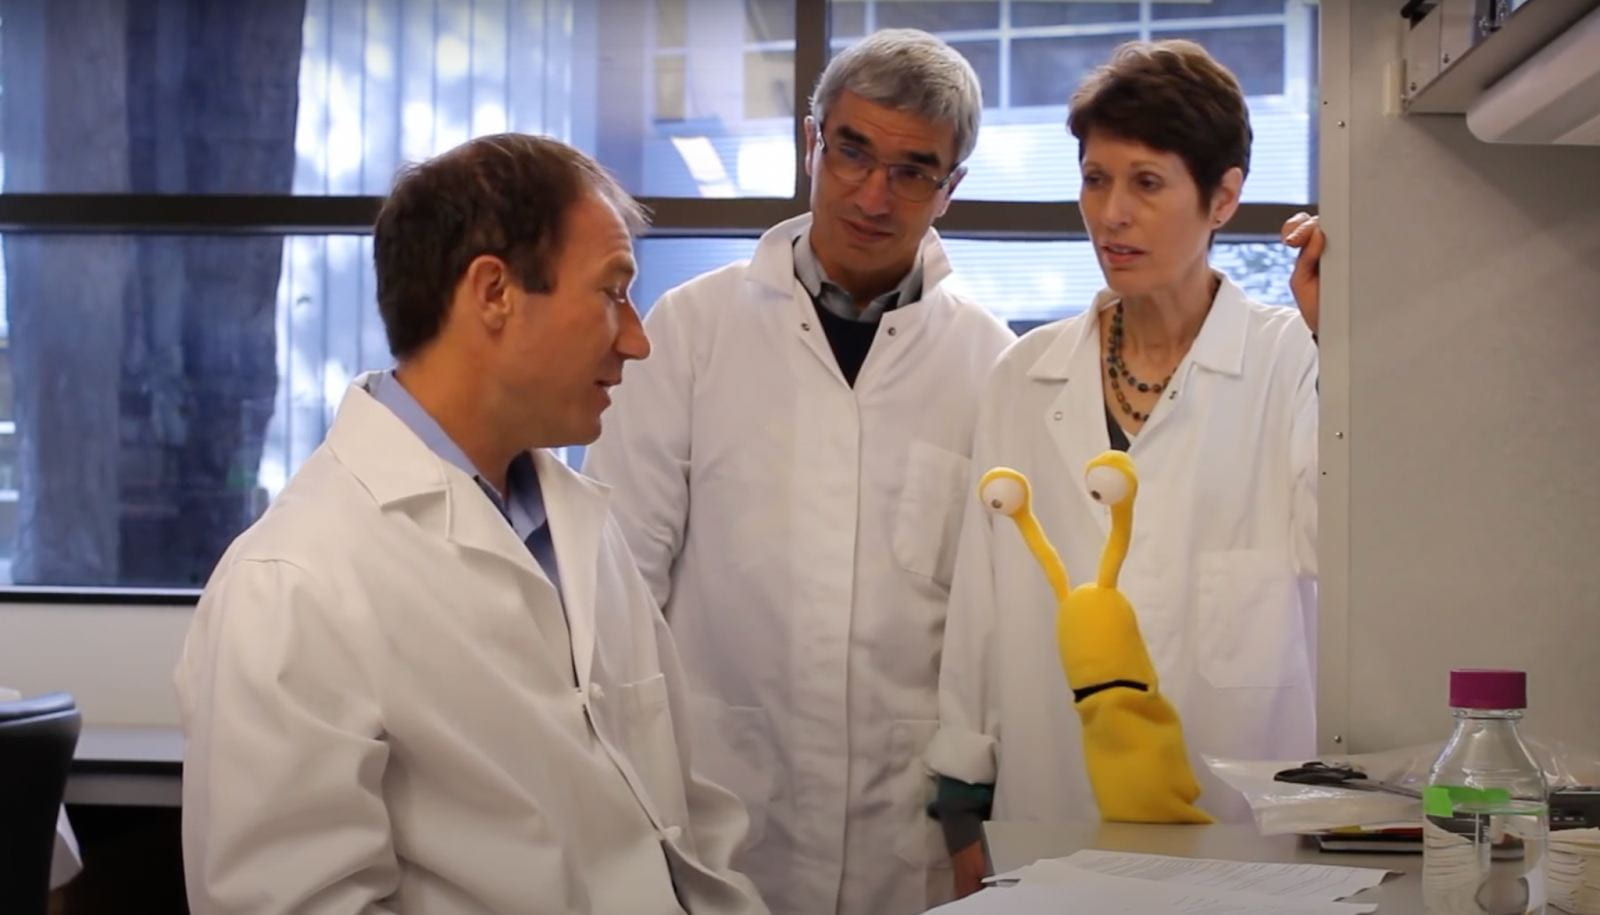 Photo of 3 researchers huddled around a banana slug puppet.